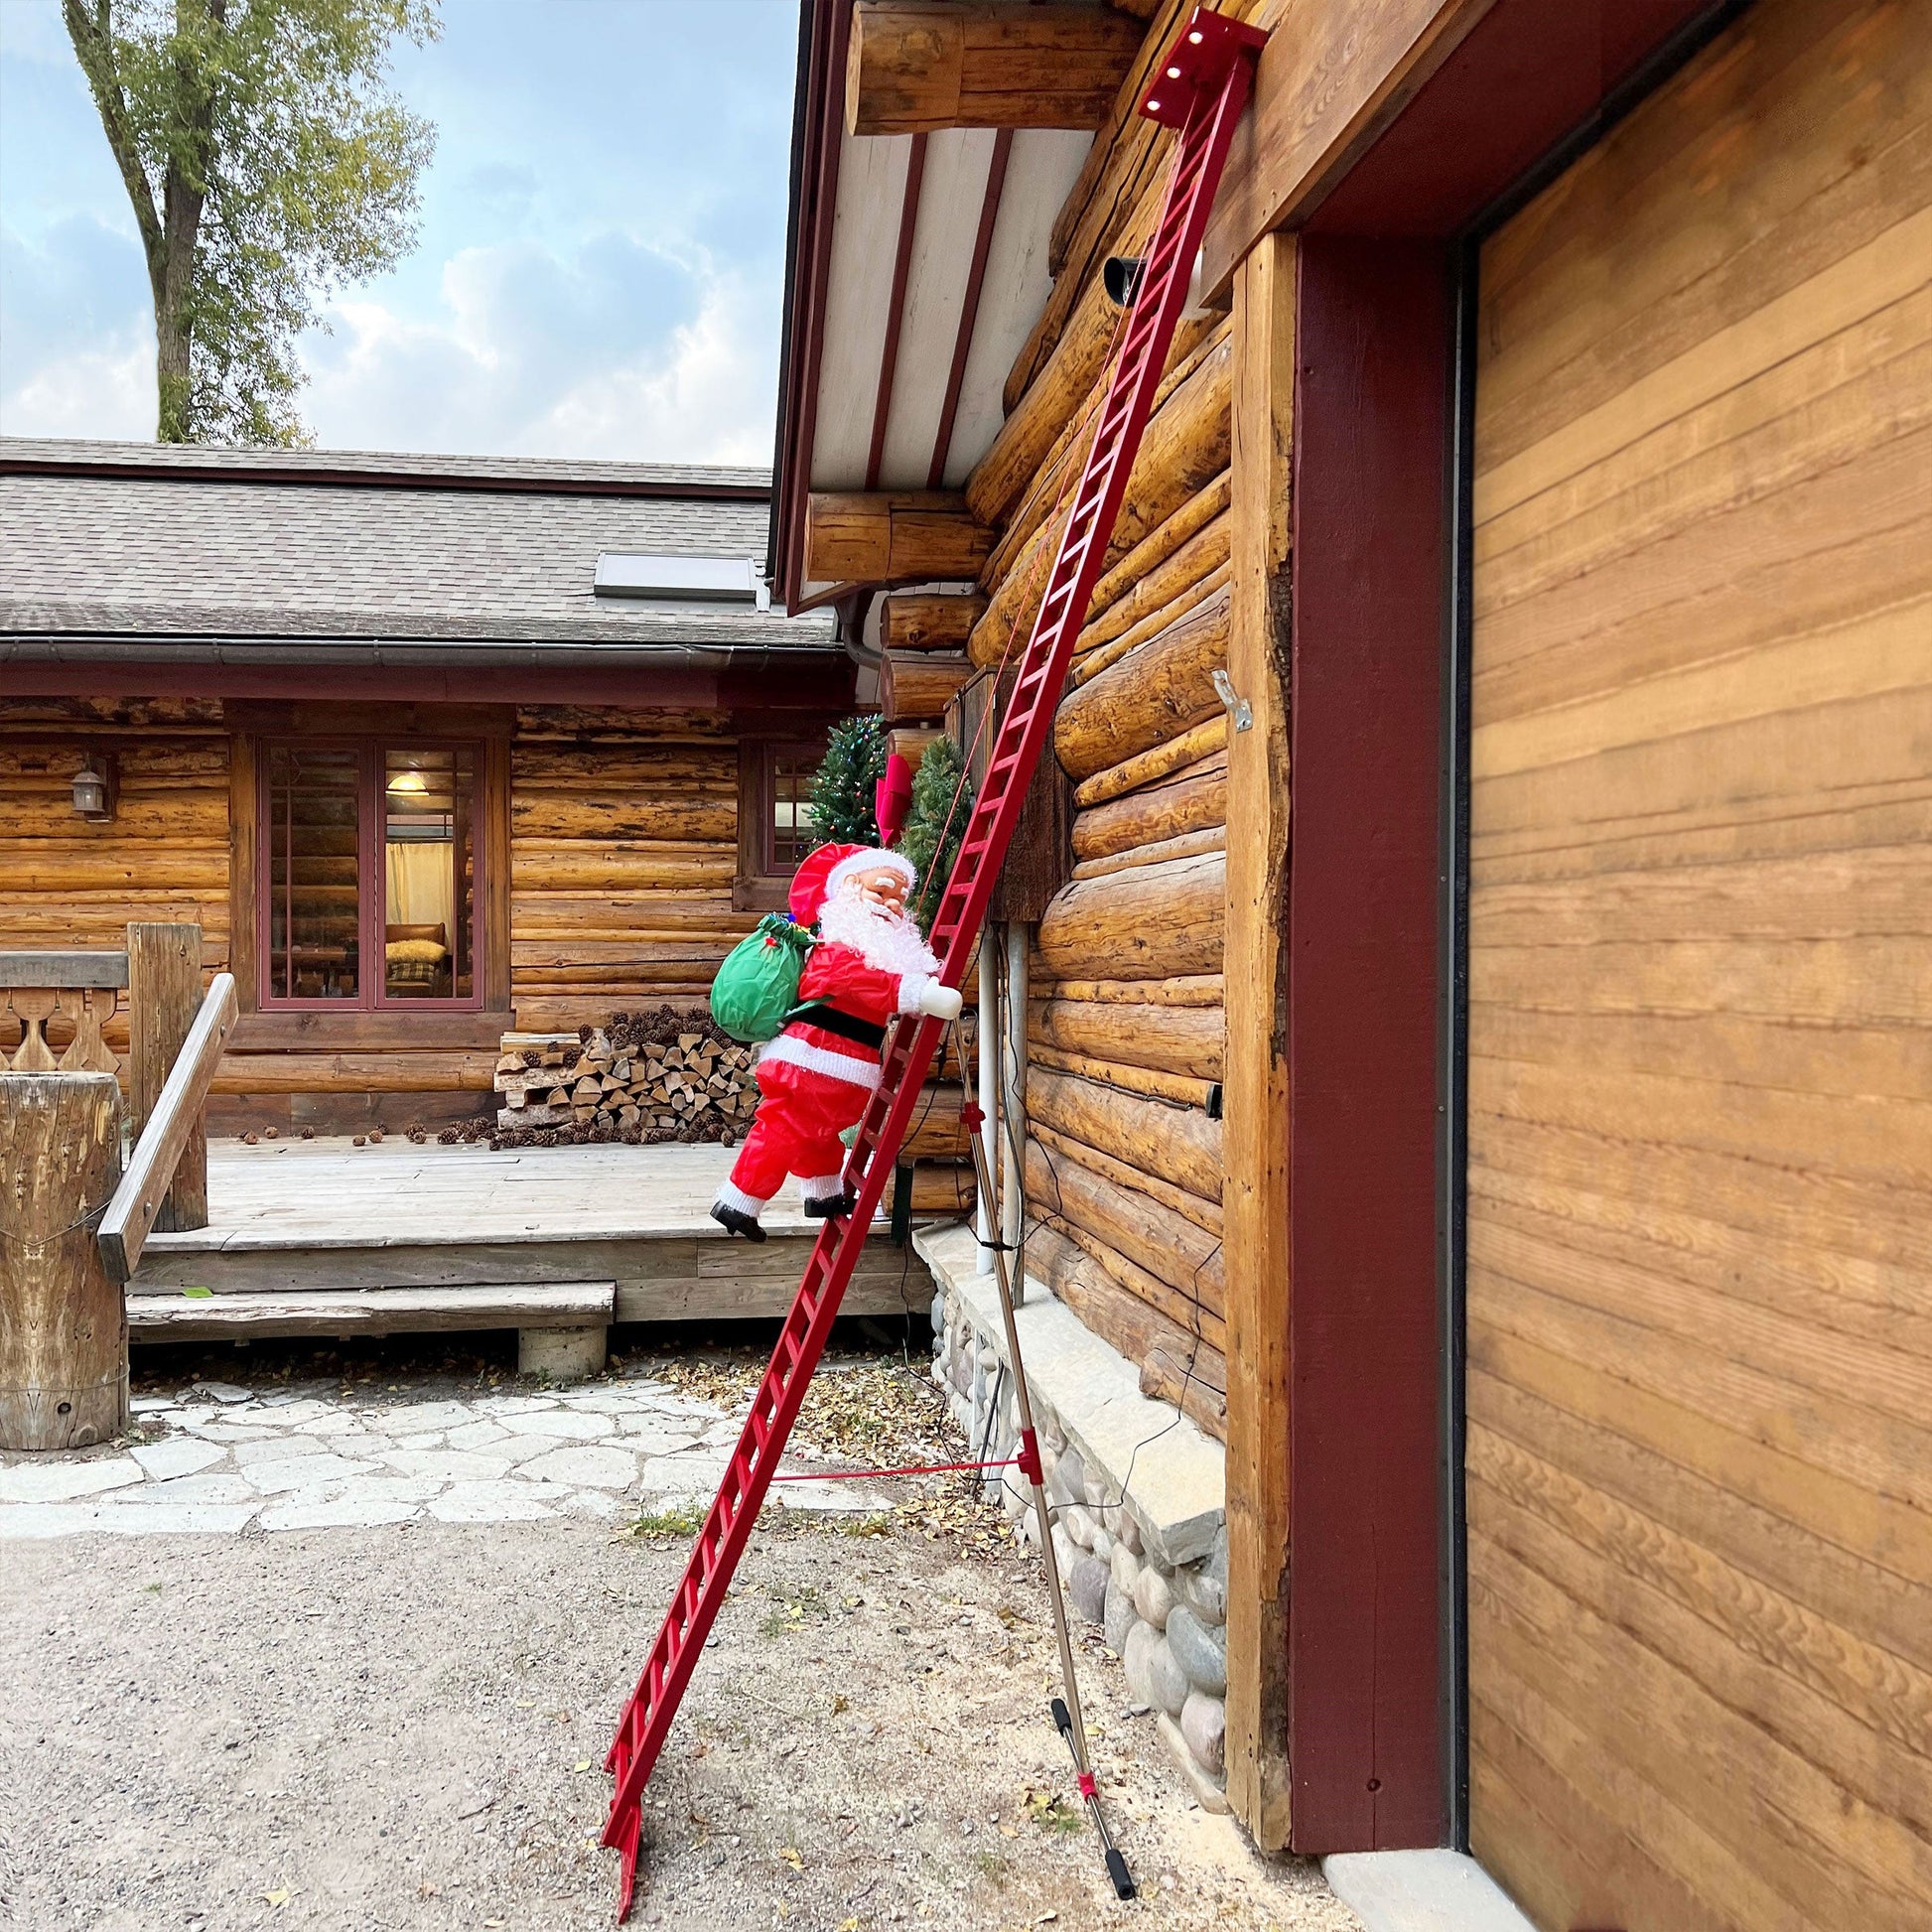 10' Outdoor Animated Super Climbing Santa - Mr. Christmas